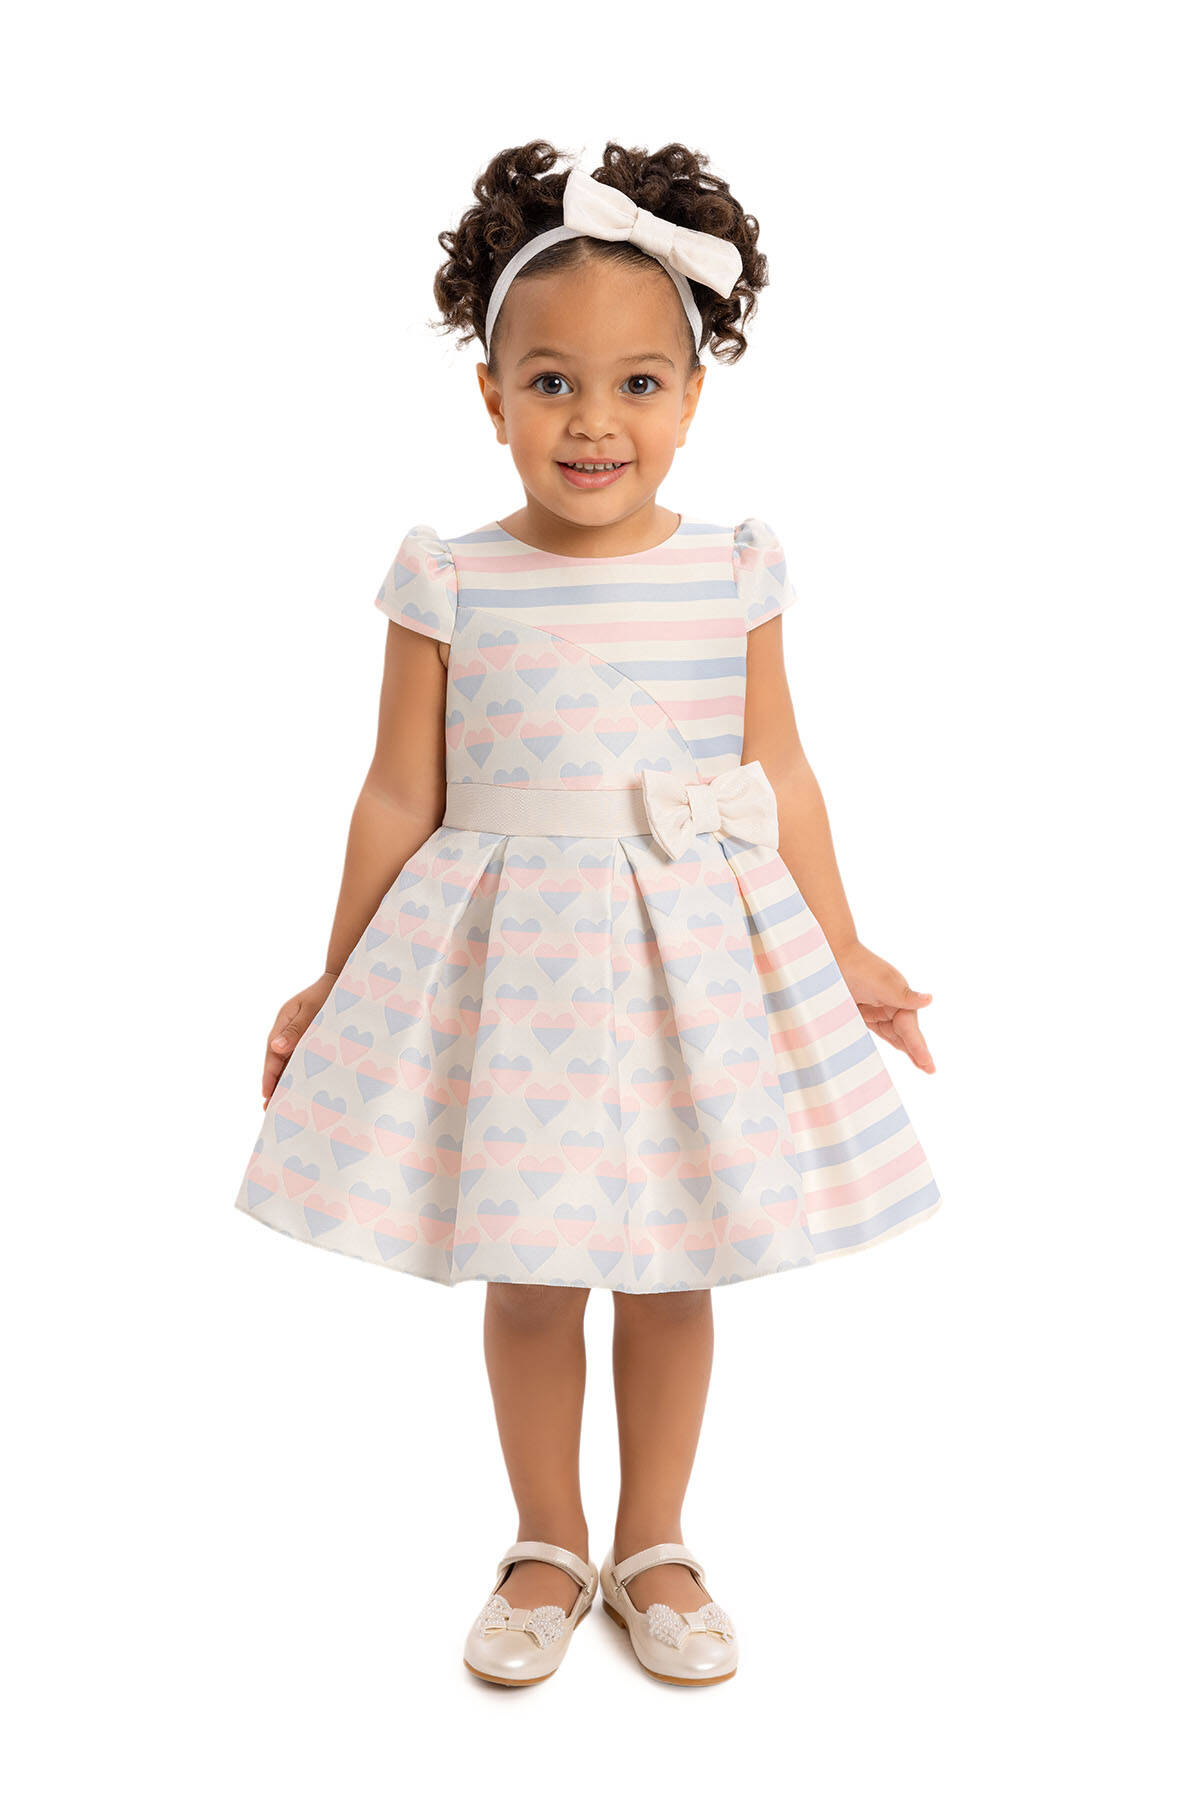 Powder Girls Heart Dress 6-24 MONTH - Pamina Kids Wholesale